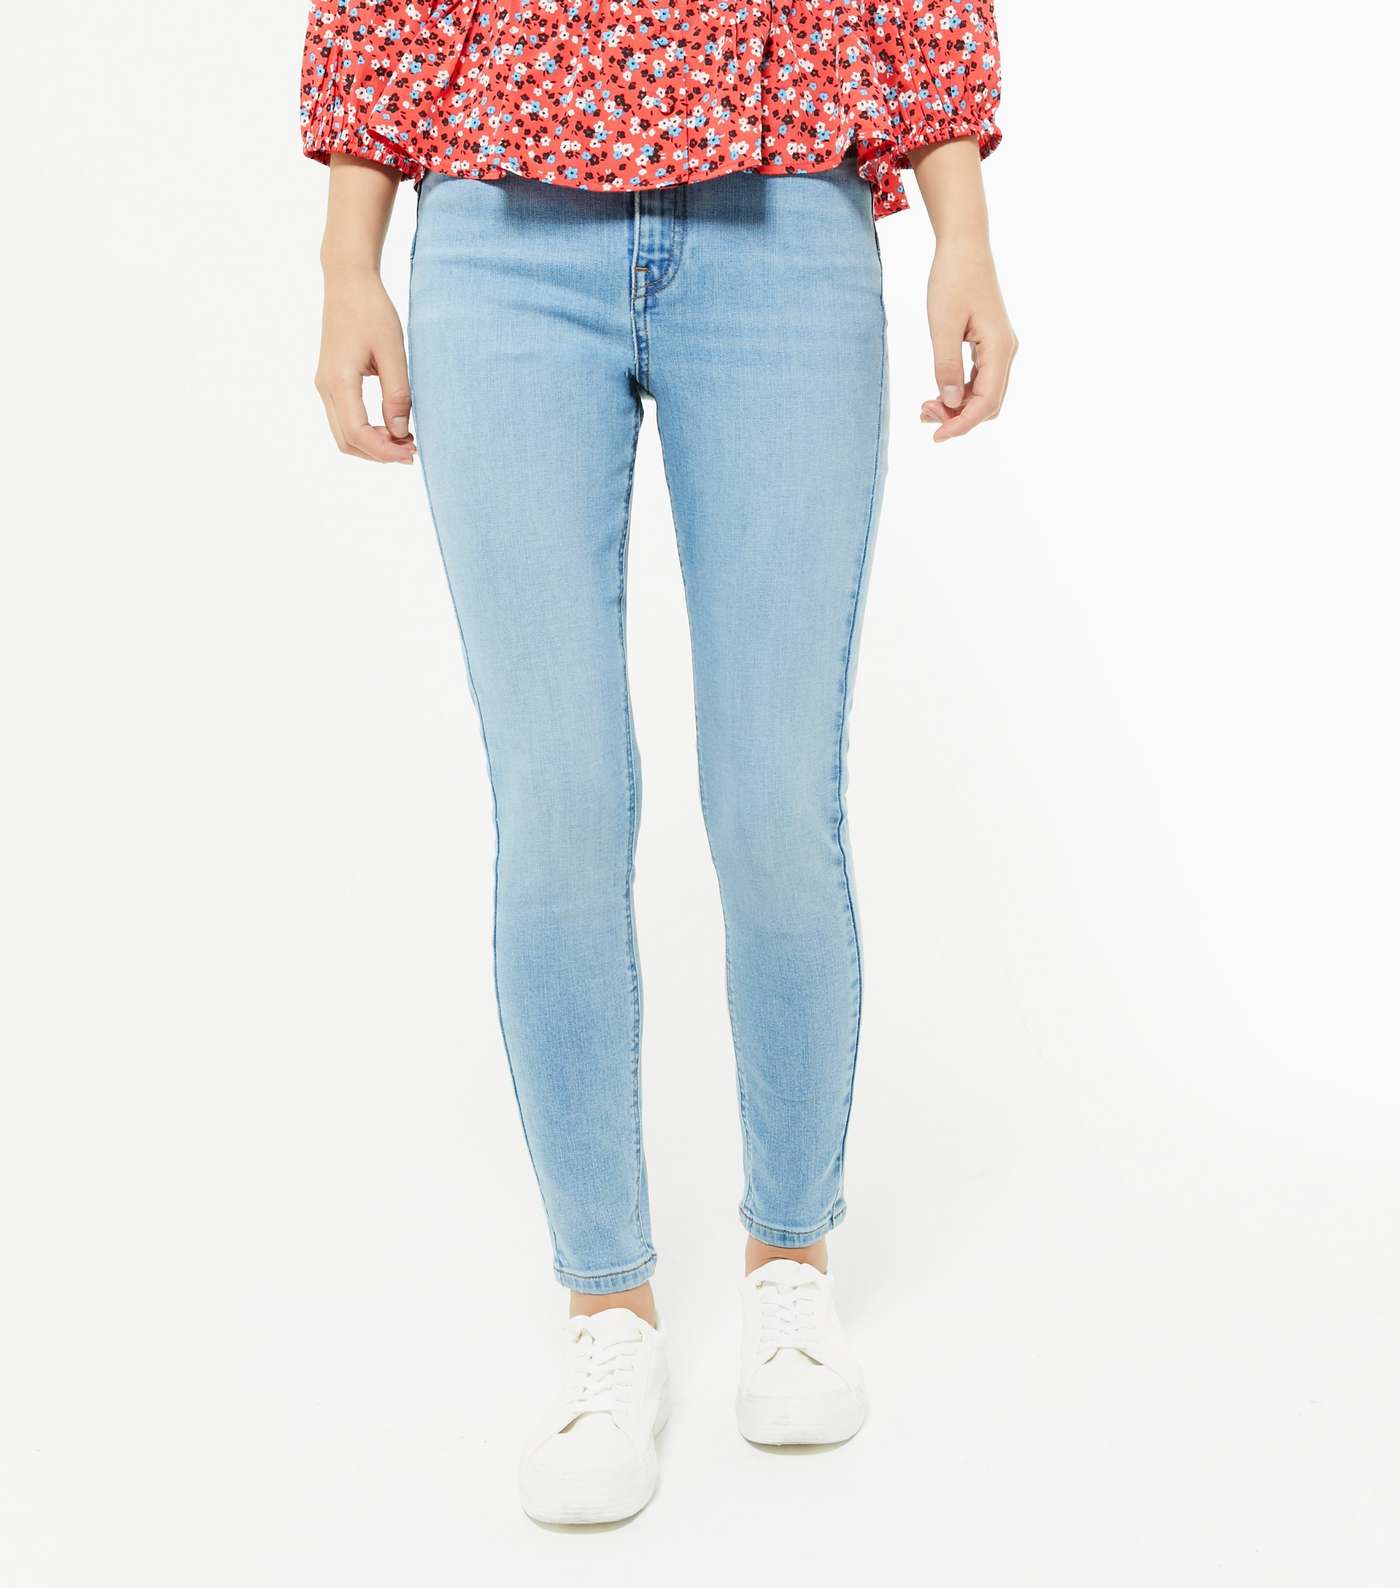 Petite Pale Blue Lift & Shape Jenna Skinny Jeans Image 2